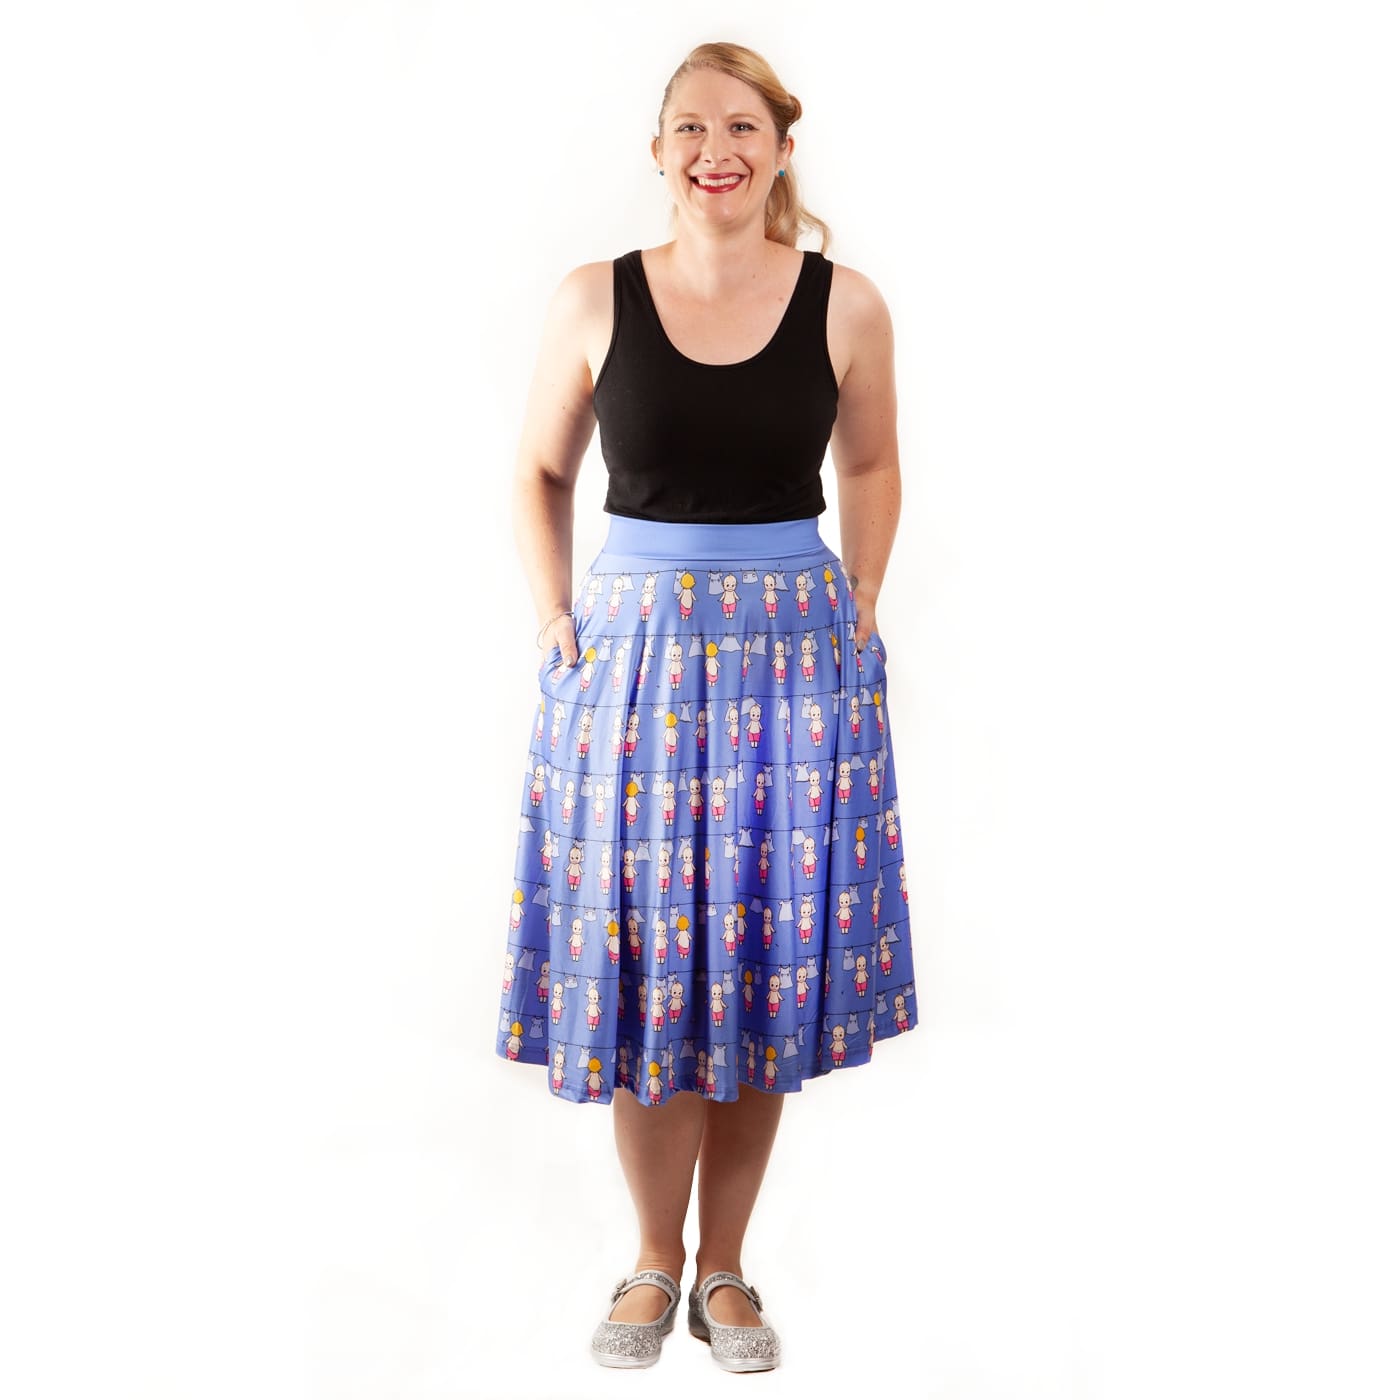 Washing Day Swishy Skirt by RainbowsAndFairies.com.au (Kewpie Doll - Kewpie - Vintage Doll - Kitsch - Circle Skirt With Pockets - Mod Retro) - SKU: CL_SWISH_WASHD_ORG - Pic-05